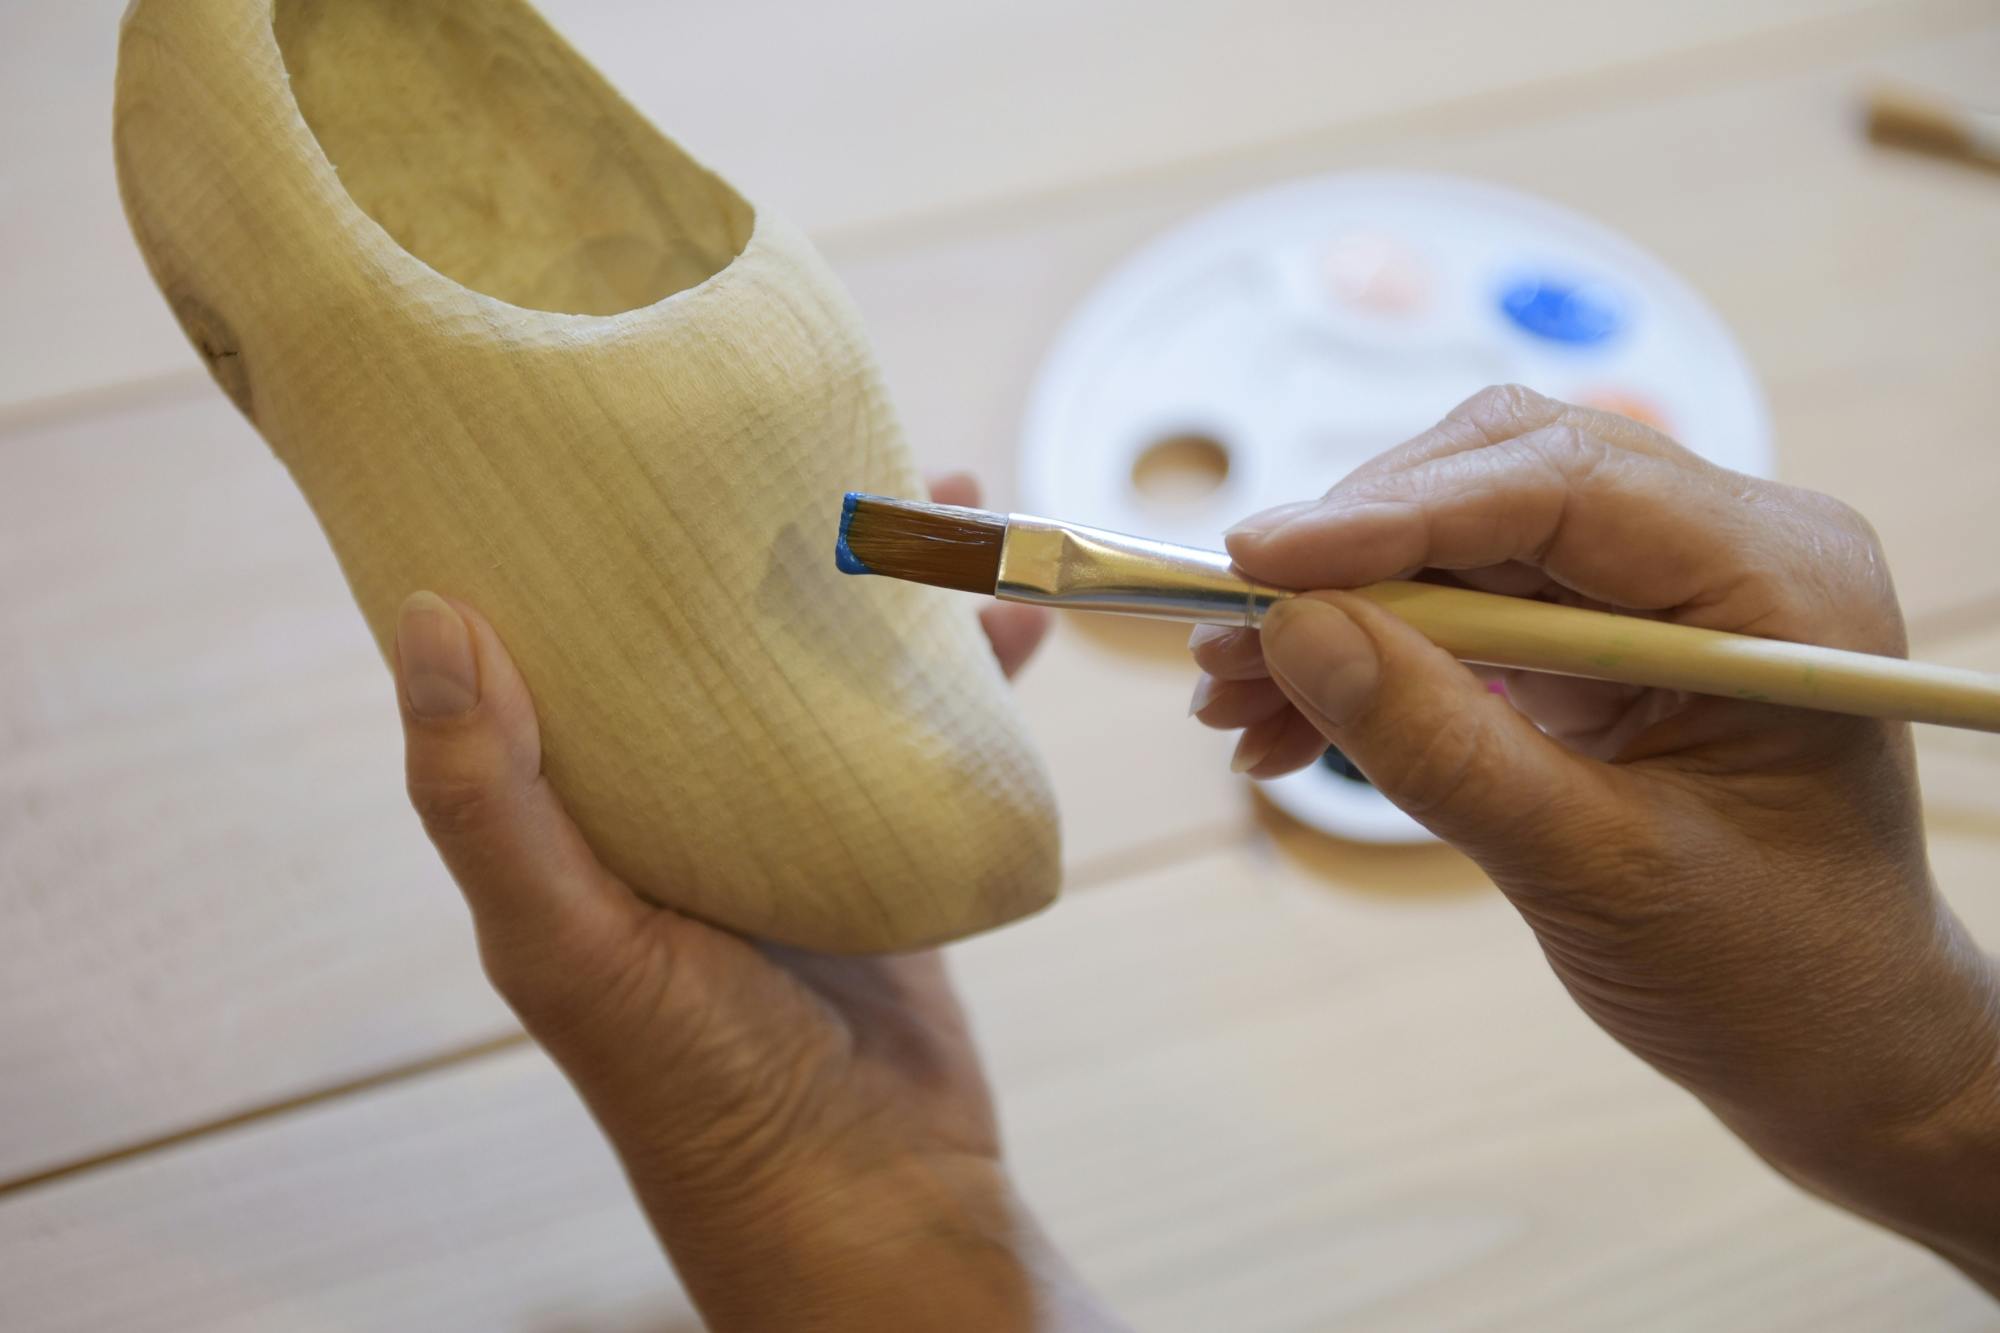 Wooden Shoe Painting Workshop at Zaanse Schans